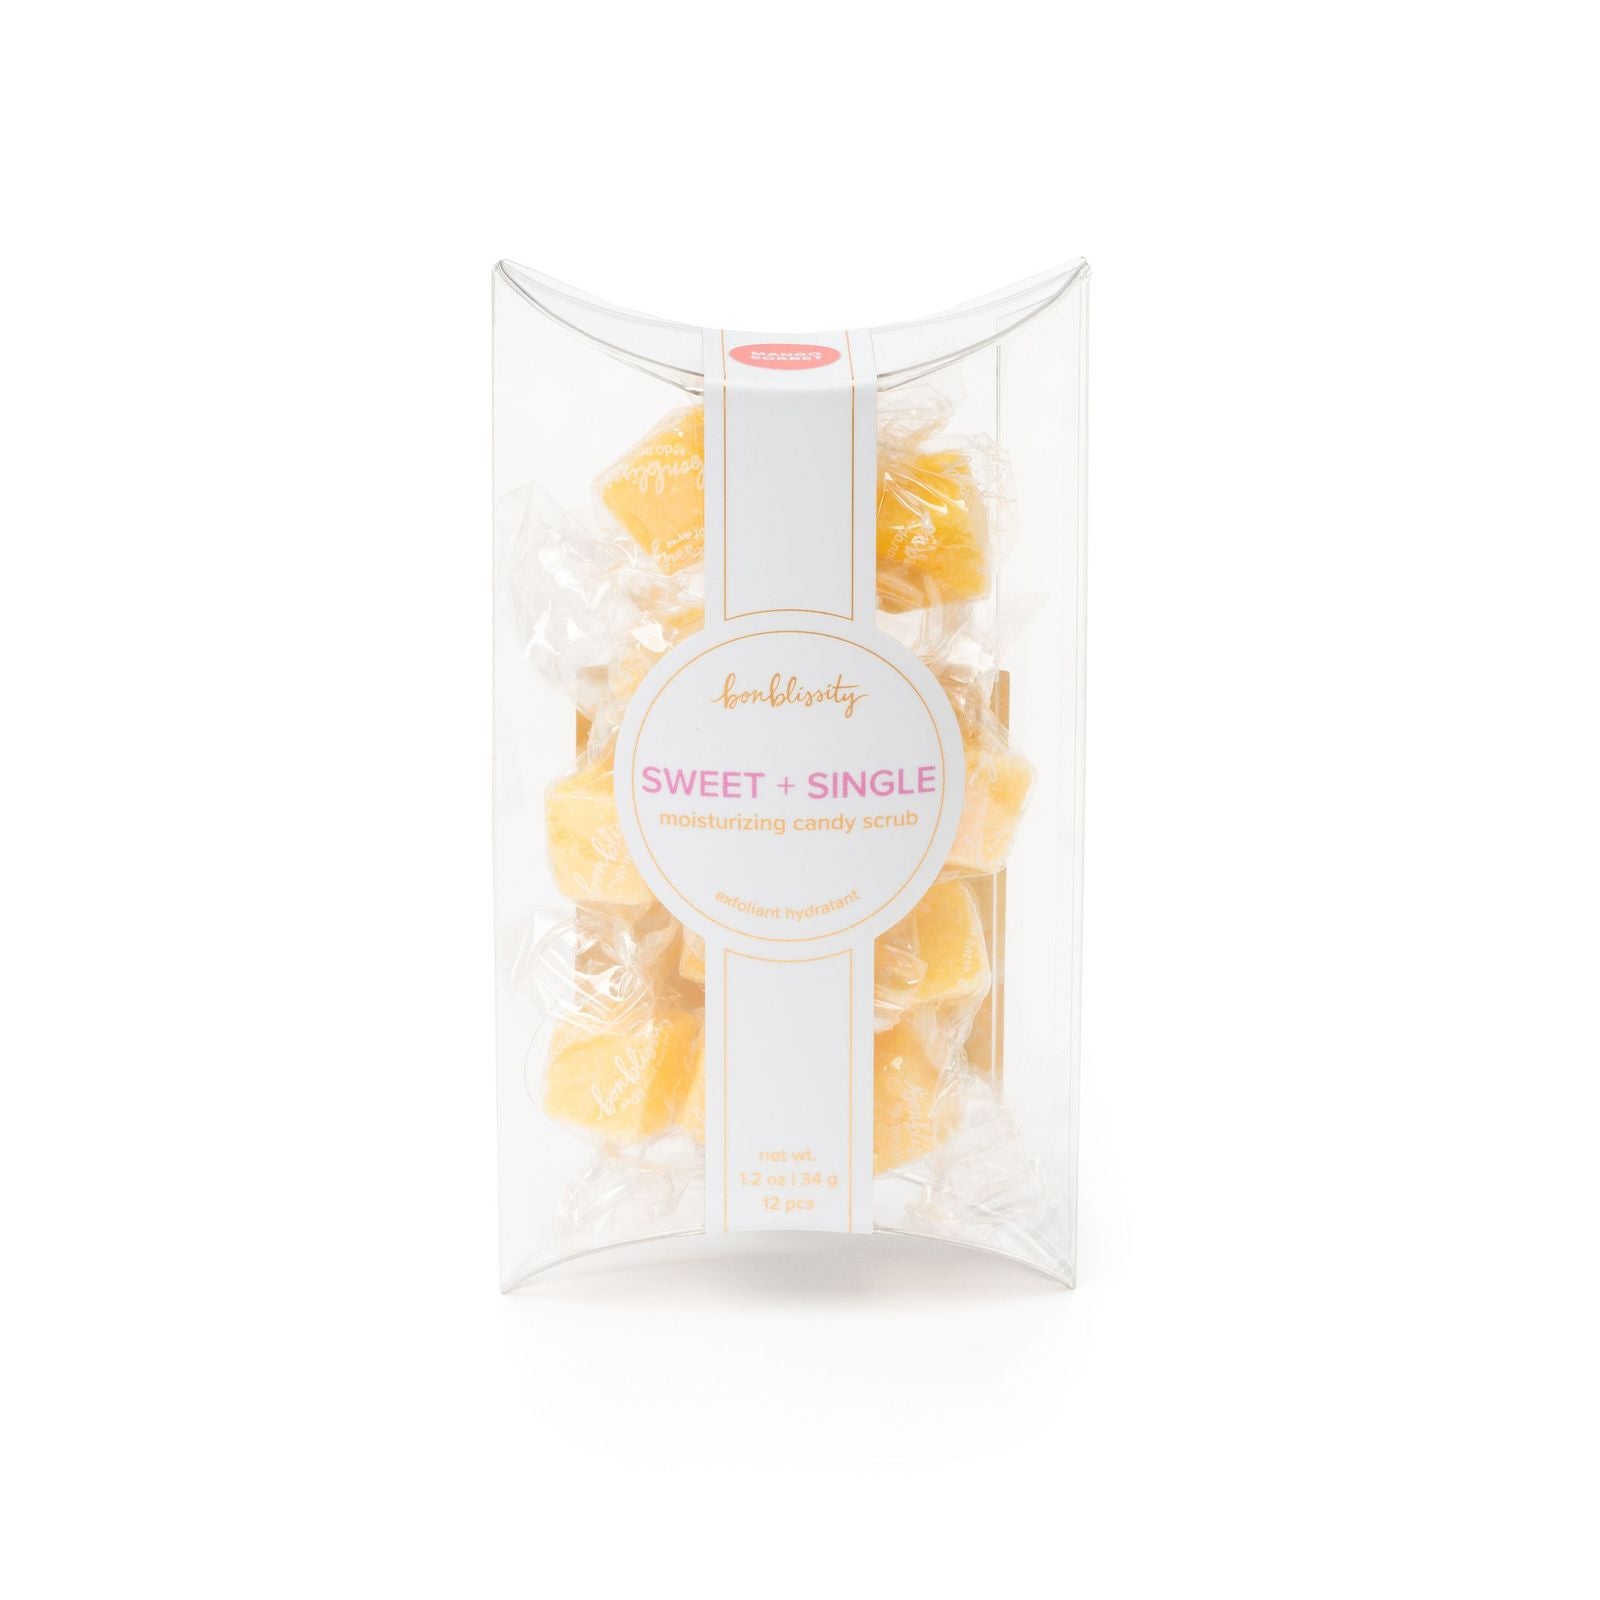 Mango Sorbet. Mini-Me Pack: Sweet+Single Candy Scrub by Bonblissity